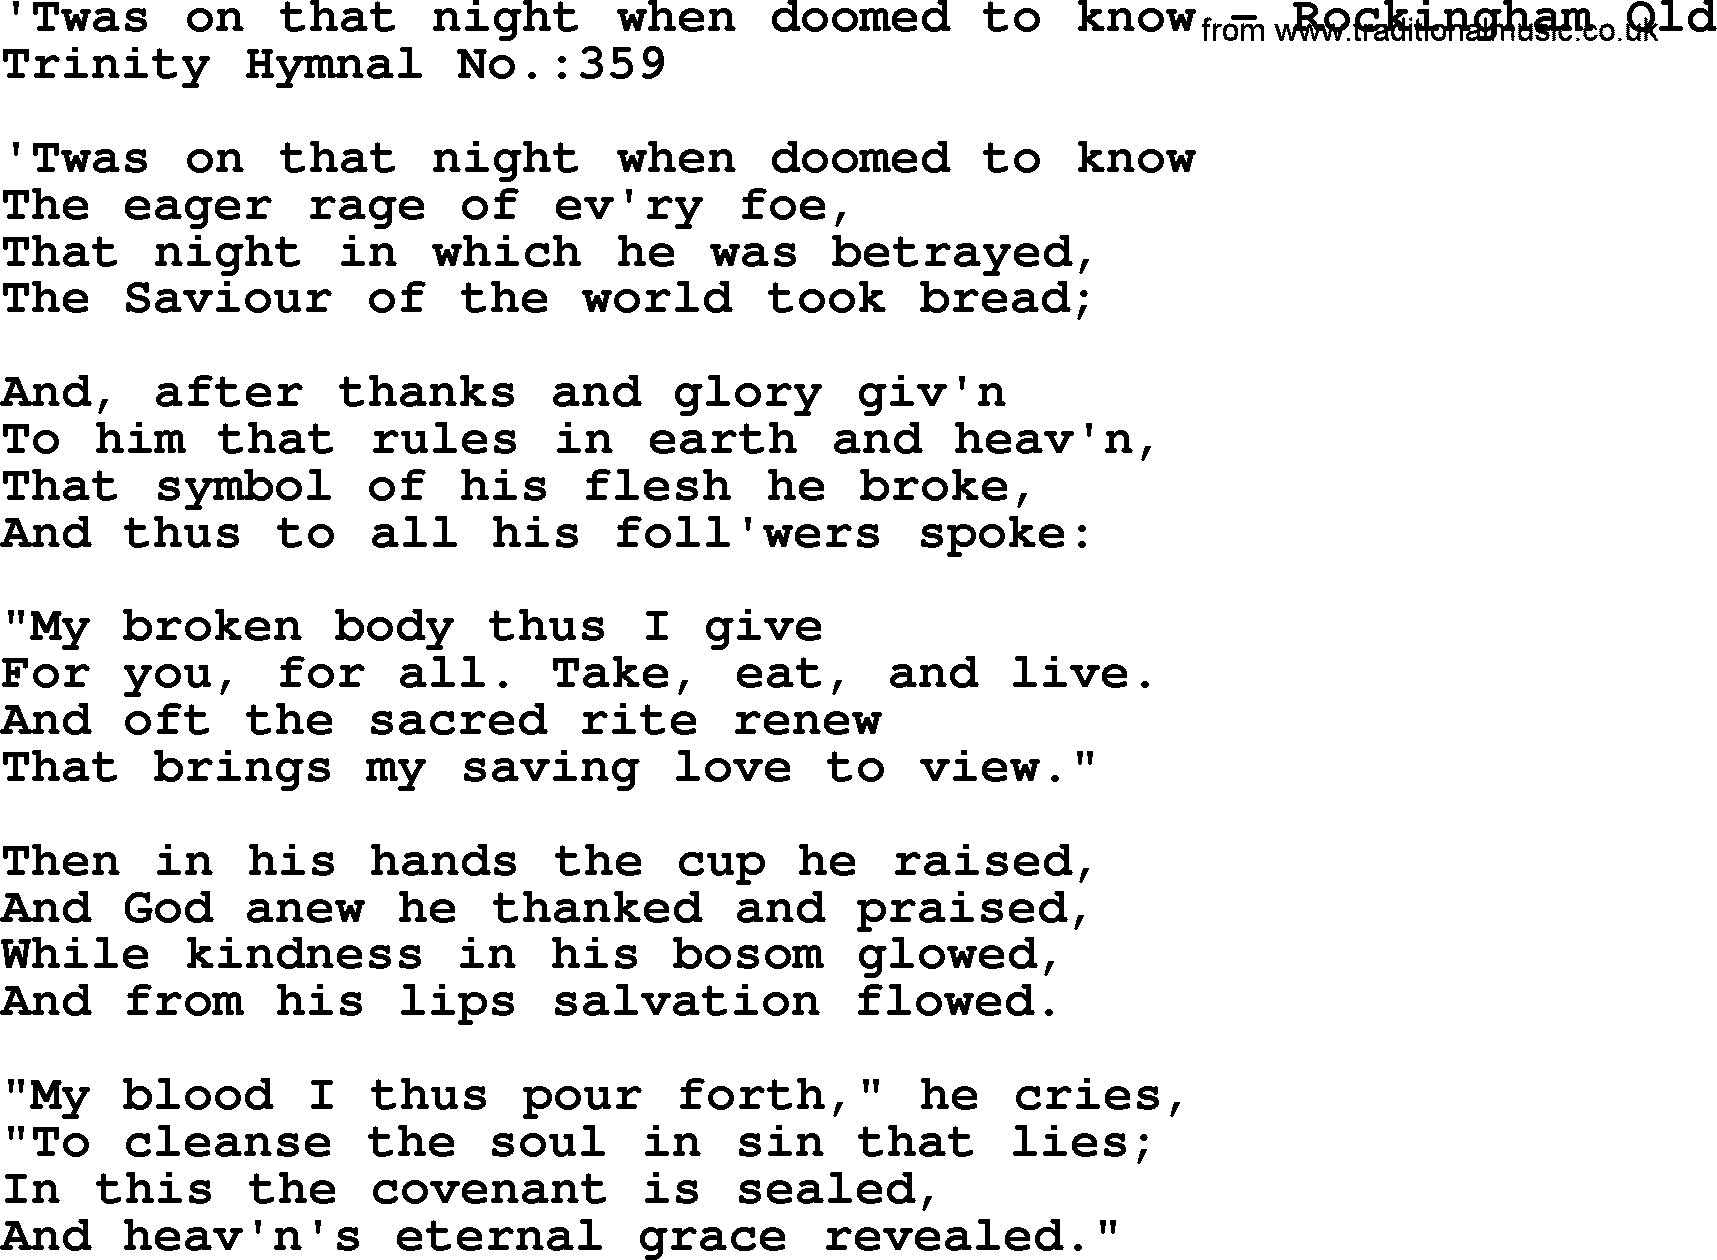 Trinity Hymnal Hymn: Twas On That Night When Doomed To Know--Rockingham Old, lyrics with midi music